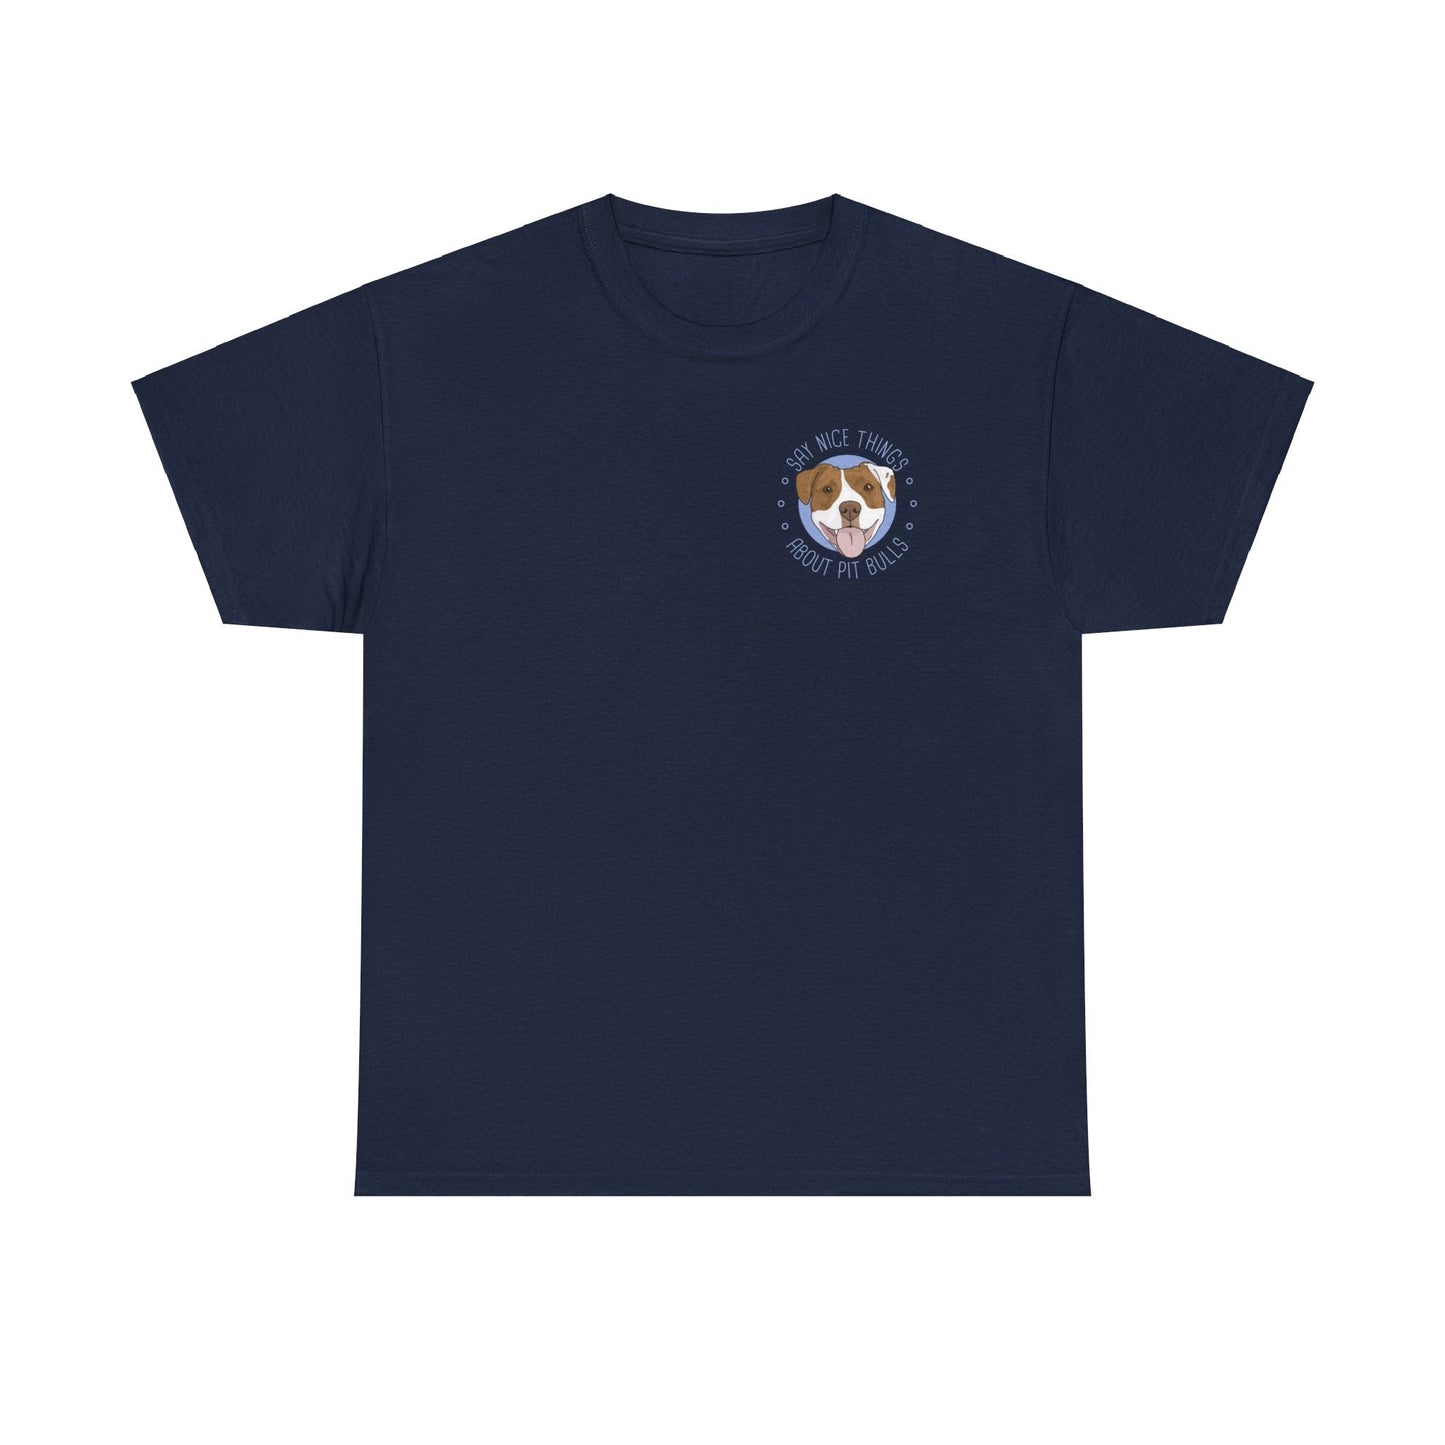 Say Nice Things About Pit Bulls | Pocket Print | T-shirt - Detezi Designs-17341705727909253986